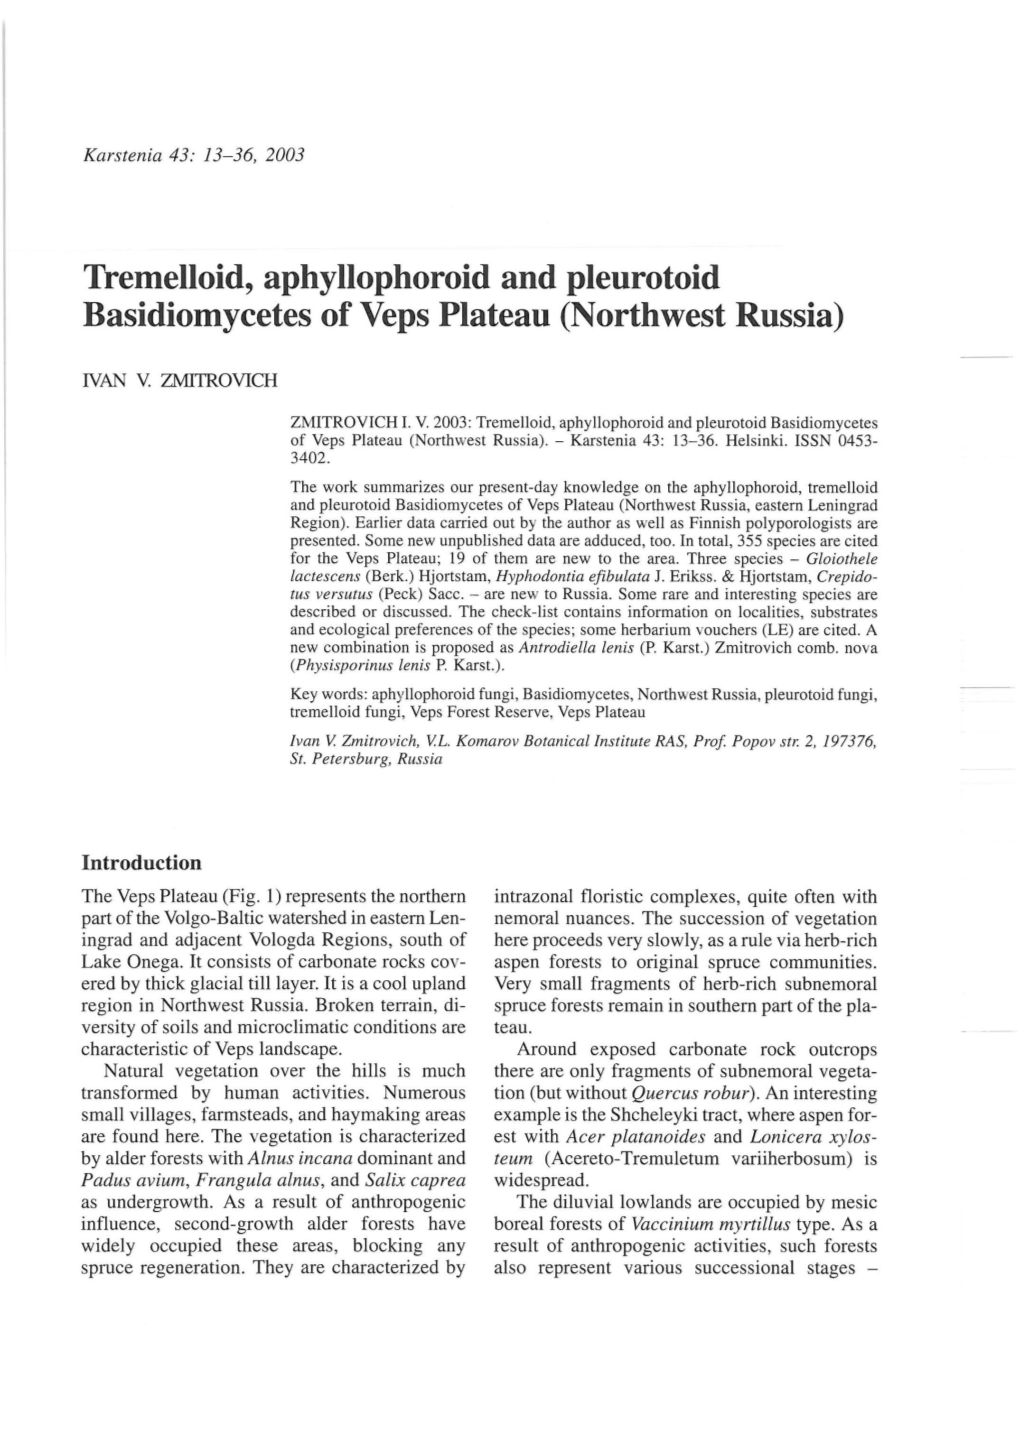 Tremelloid, Aphyllophoroid and Pleurotoid Basidiomycetes of Veps Plateau (Northwest Russia)